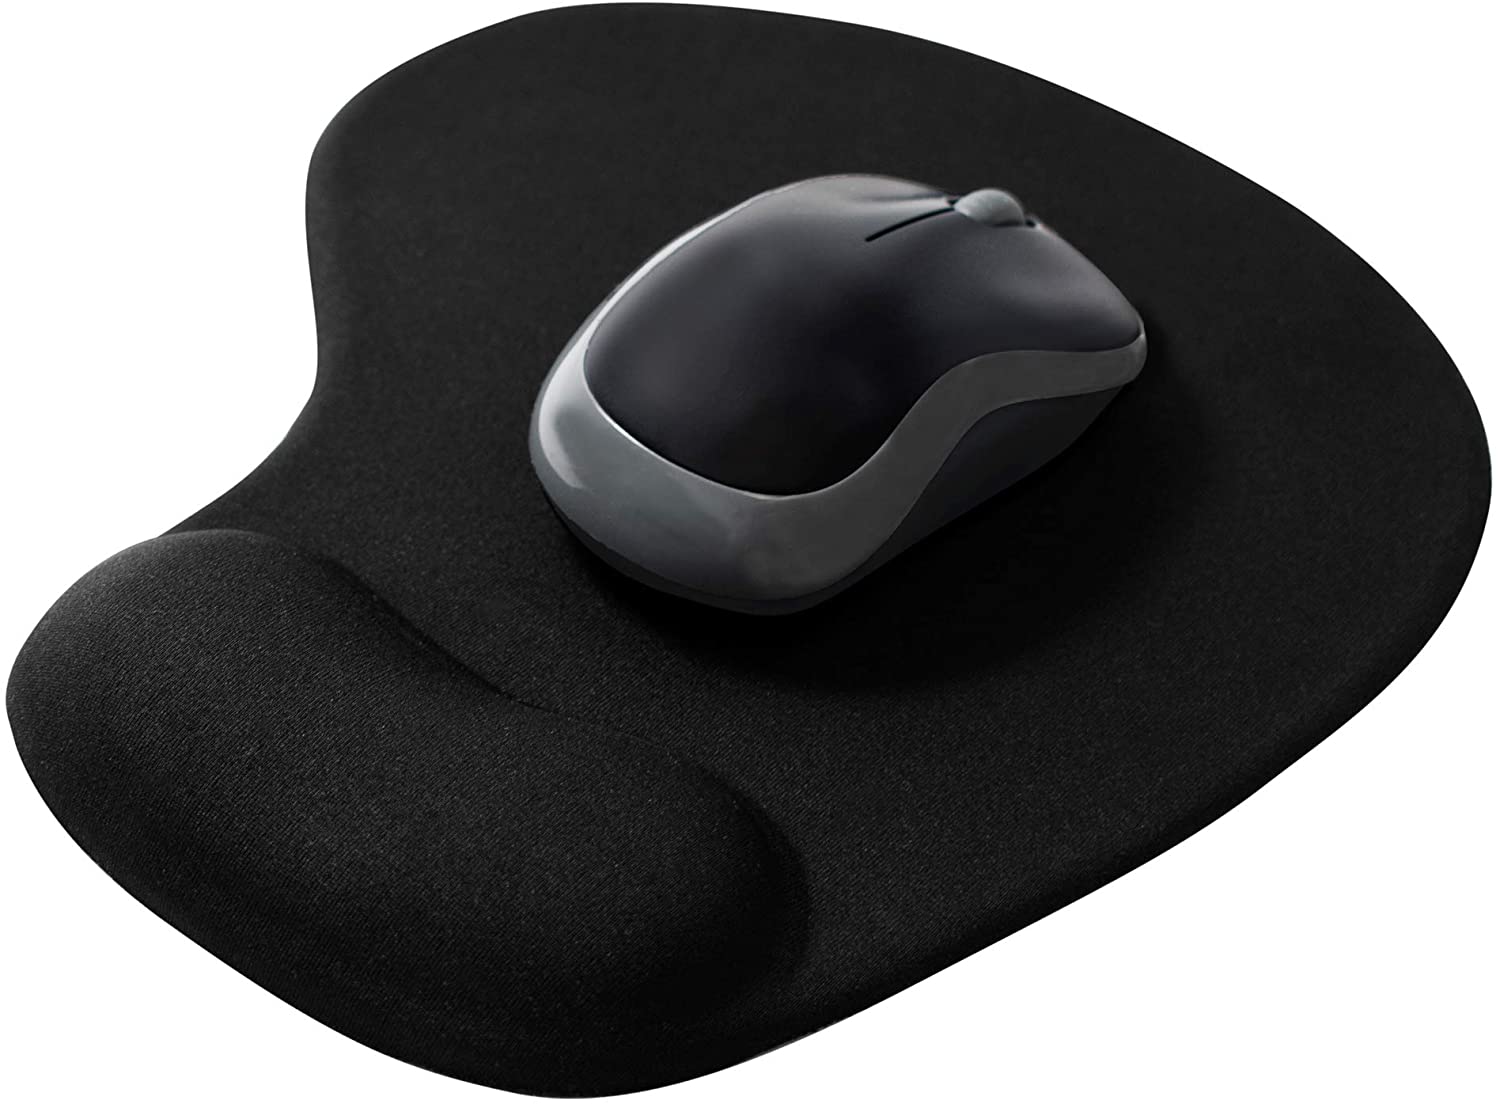 TRIXES Black Comfort Mouse Mat